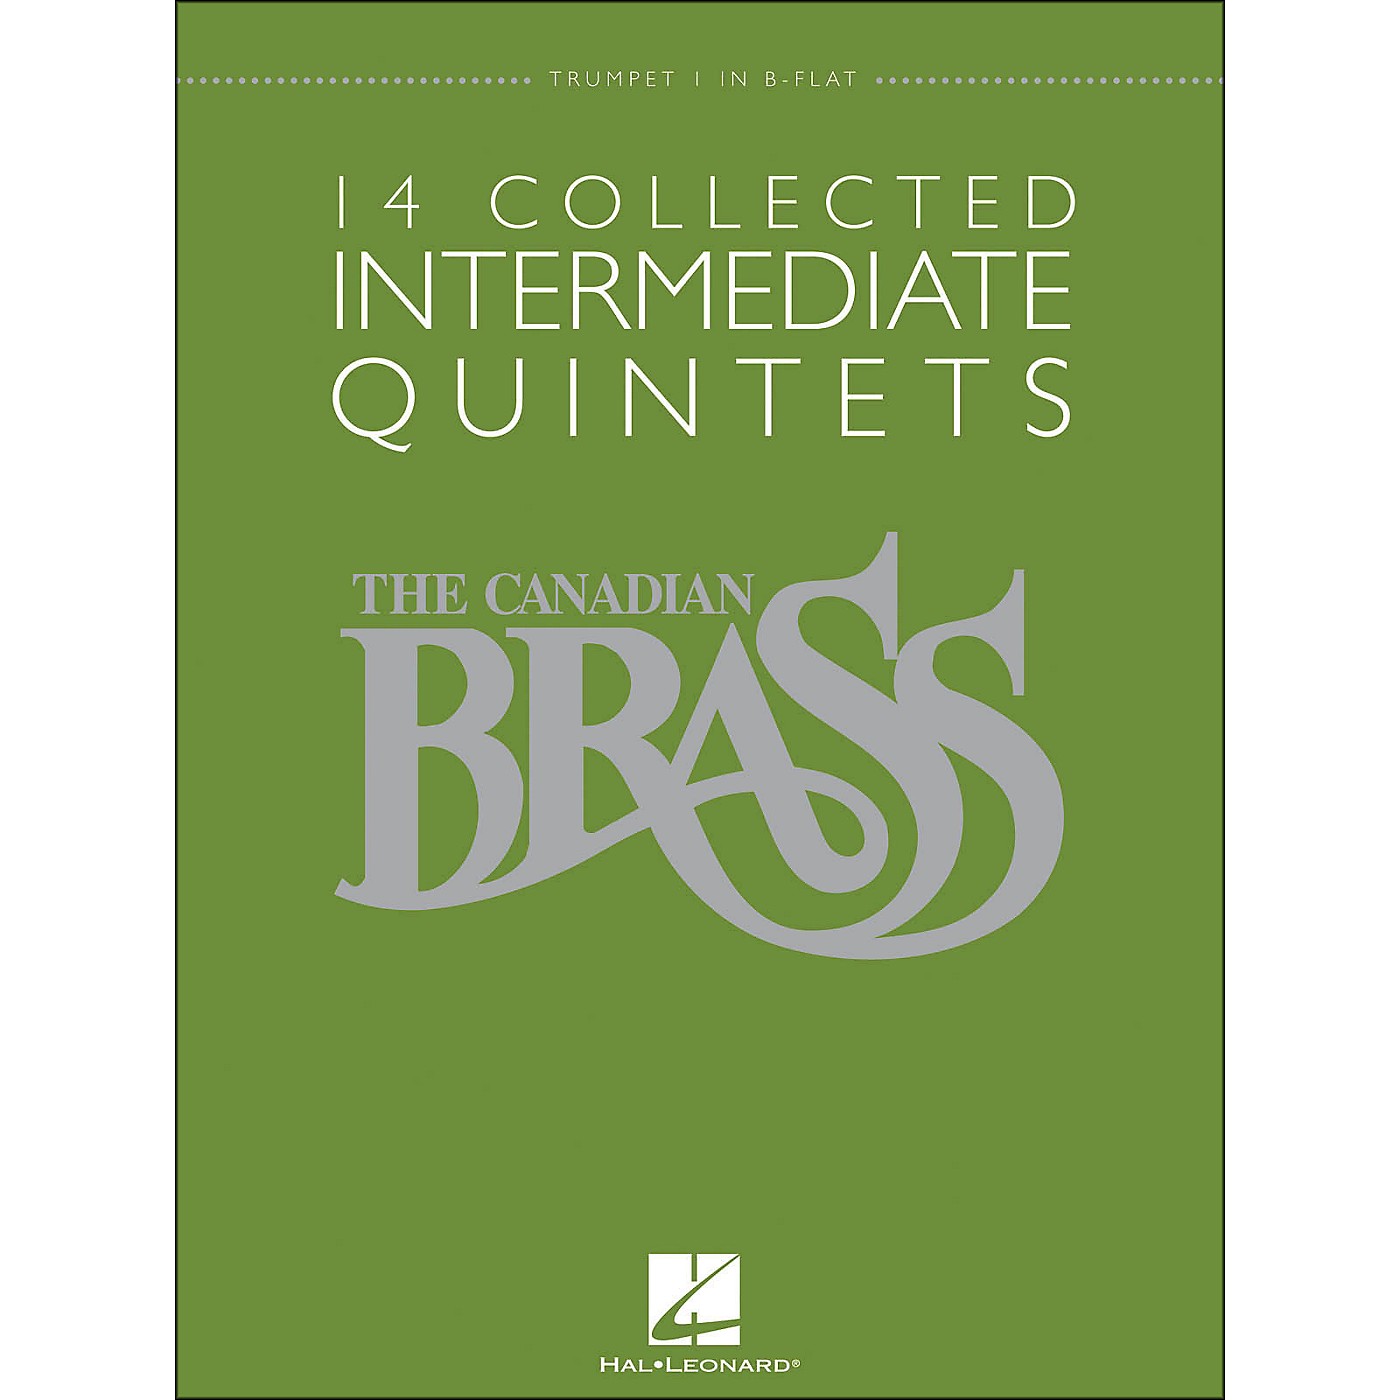 Hal Leonard The Canadian Brass: 14 Collected Intermediate Quintets - Trumpet 1 - Brass Quintet thumbnail